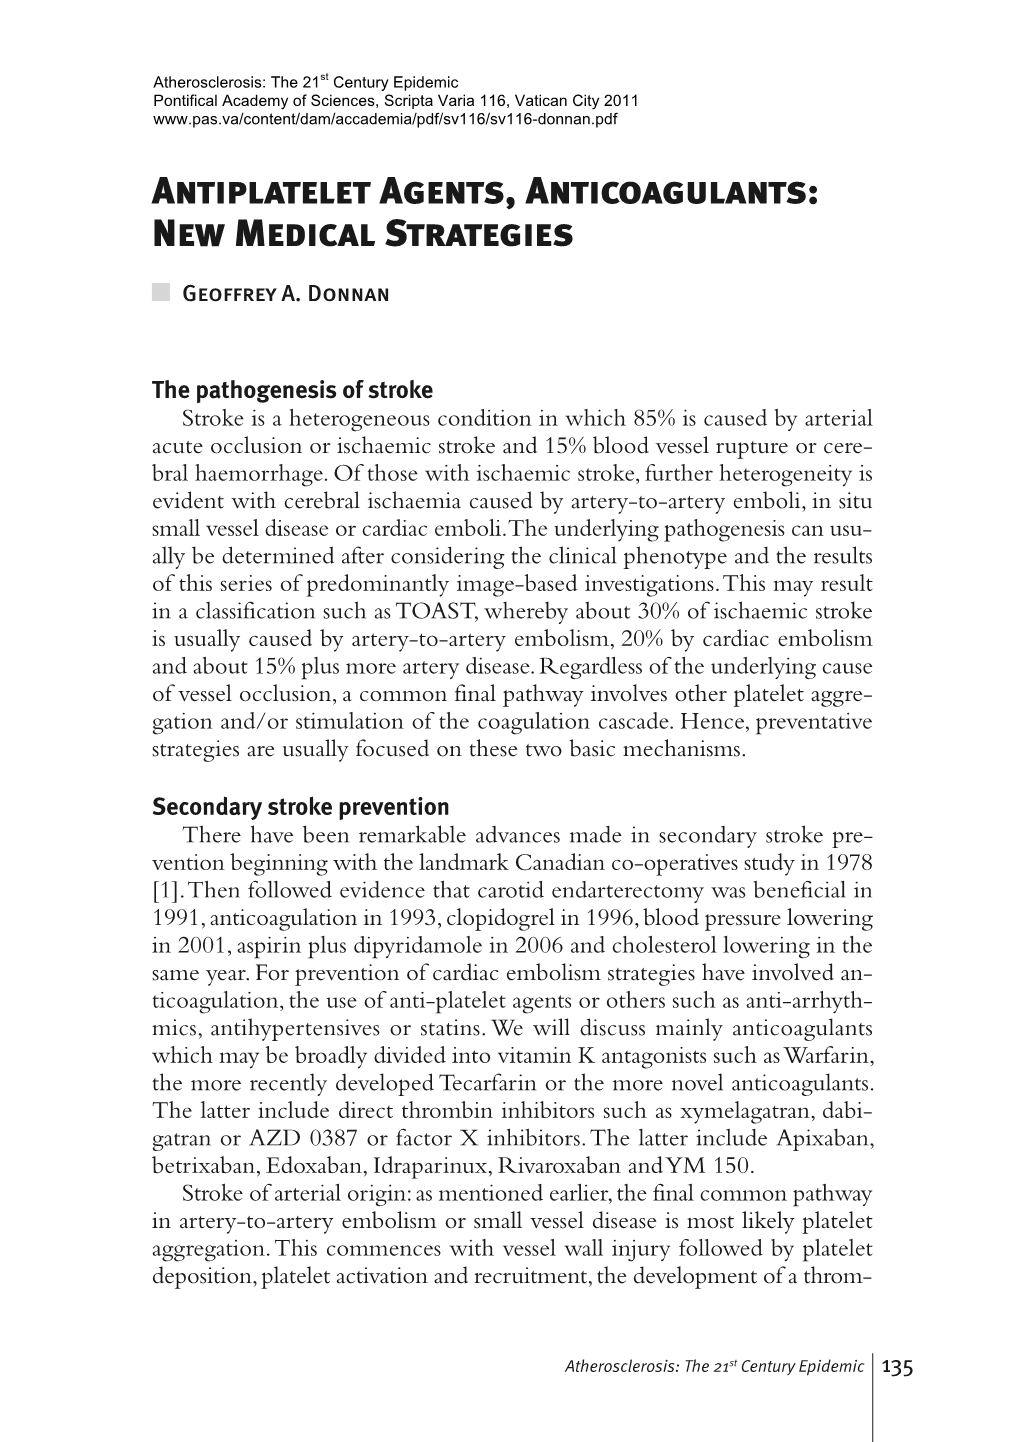 Antiplatelet Agents, Anticoagulants: New Medical Strategies